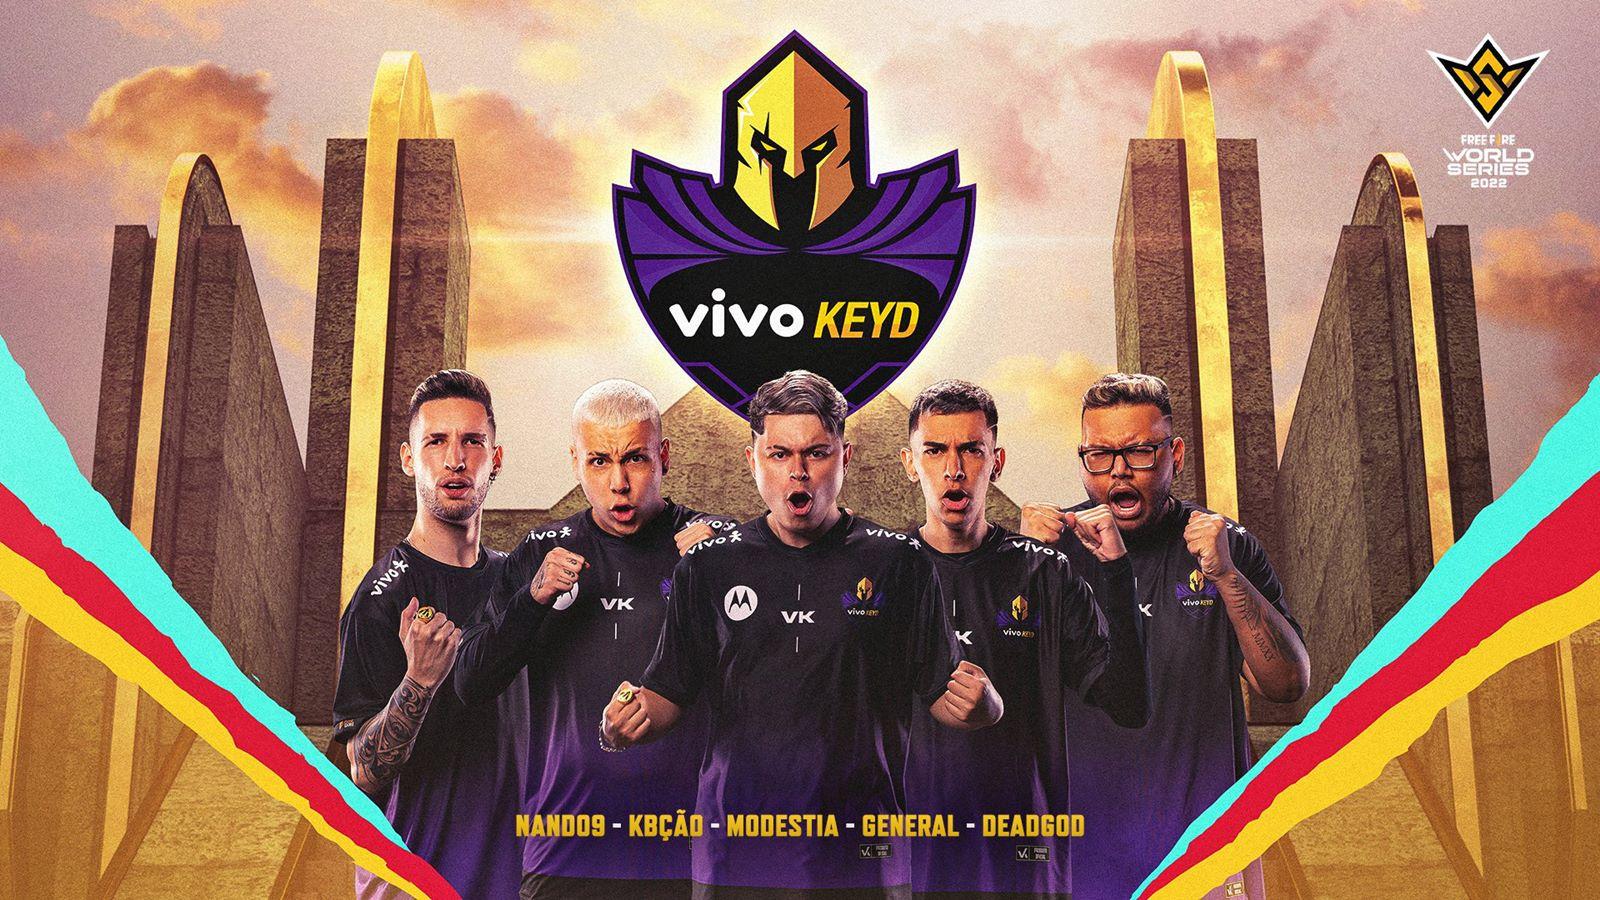 Piala Dunia Free Fire 2022: Vivo Keyd bergabung dengan LOUD di final di Sentosa